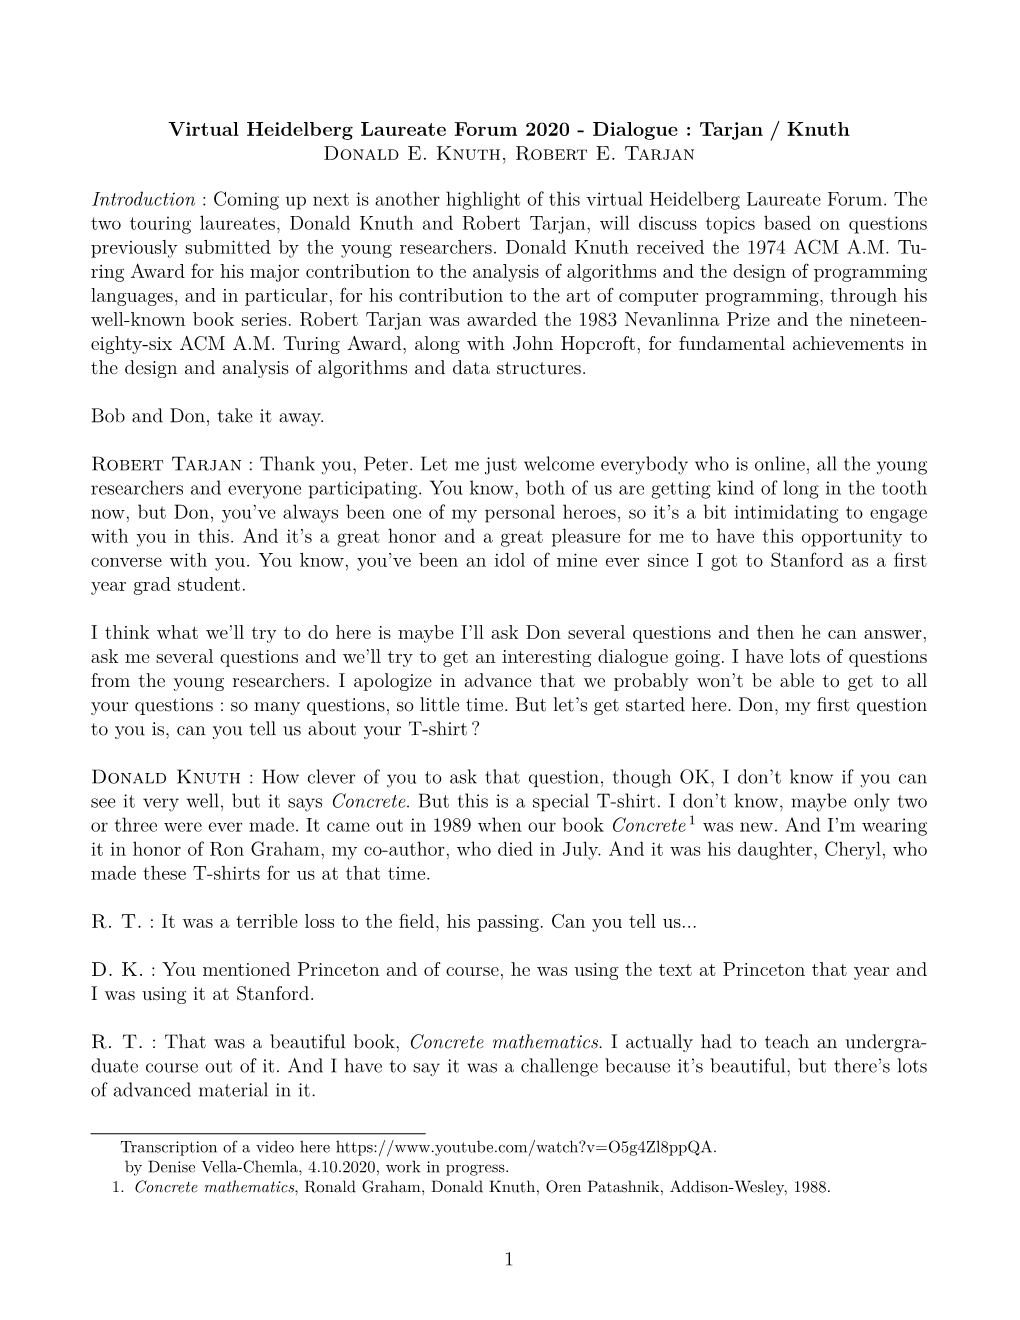 Tarjan / Knuth Donald E. Knuth, Robert E. Tarjan Introduction